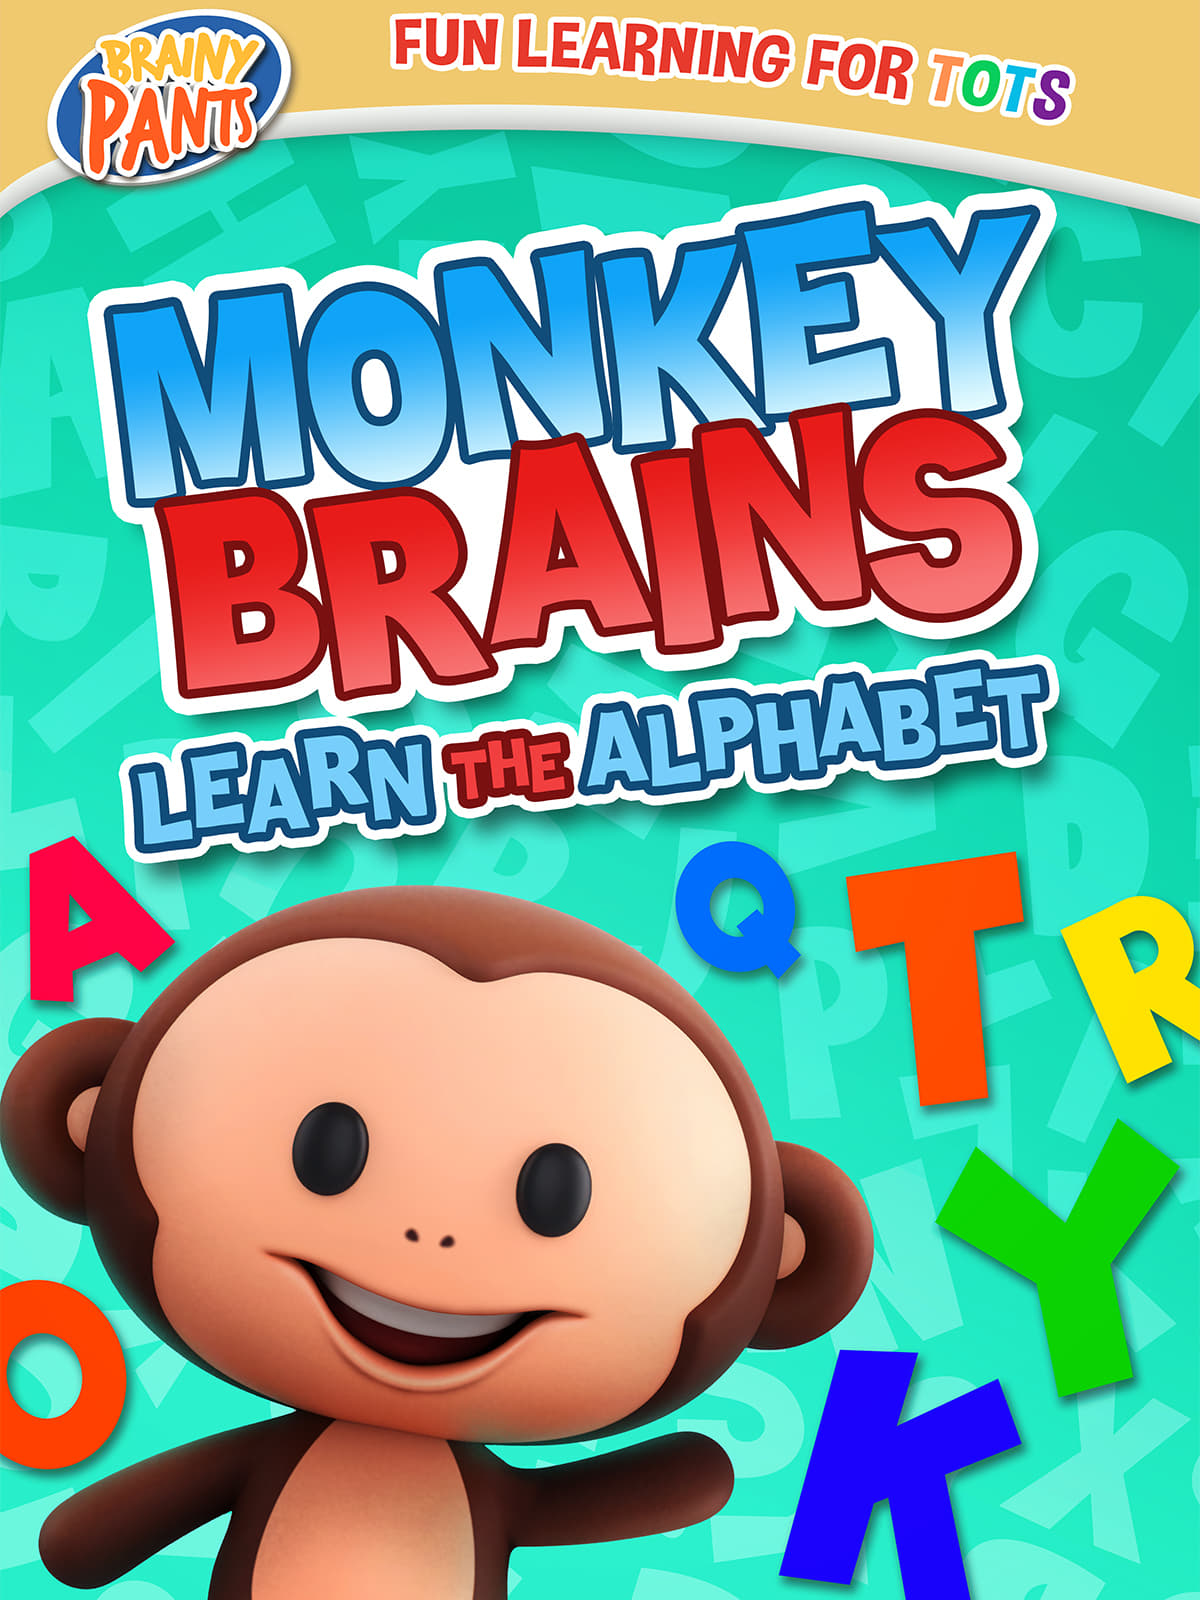 MonkeyBrains: Learn The Alphabet